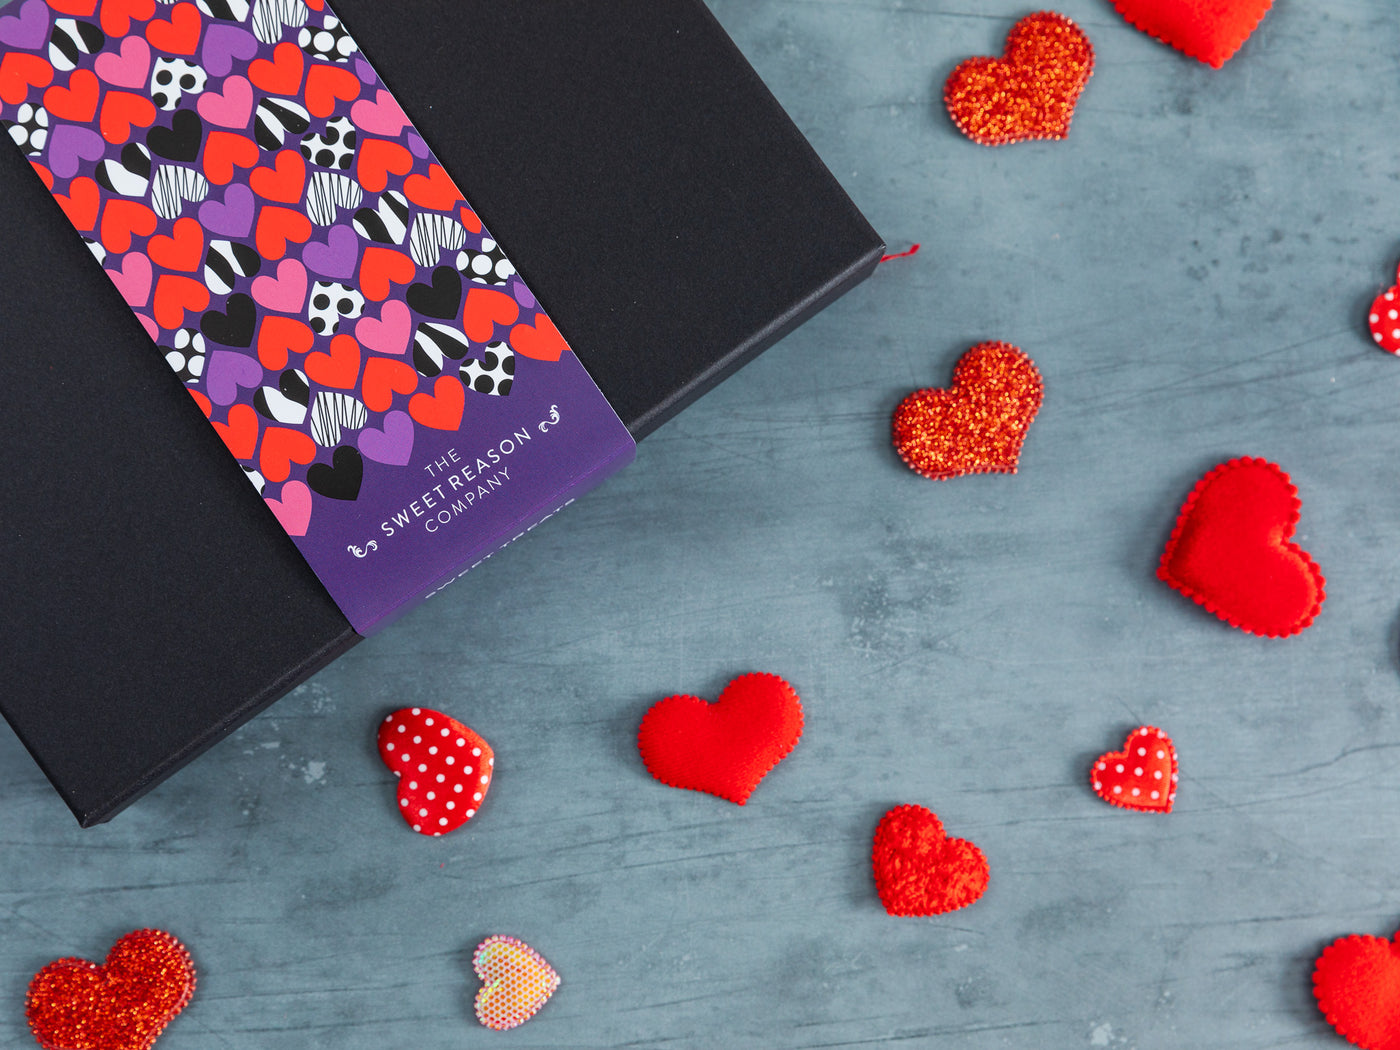 'King of Hearts' Vegan Indulgent Brownie Gift